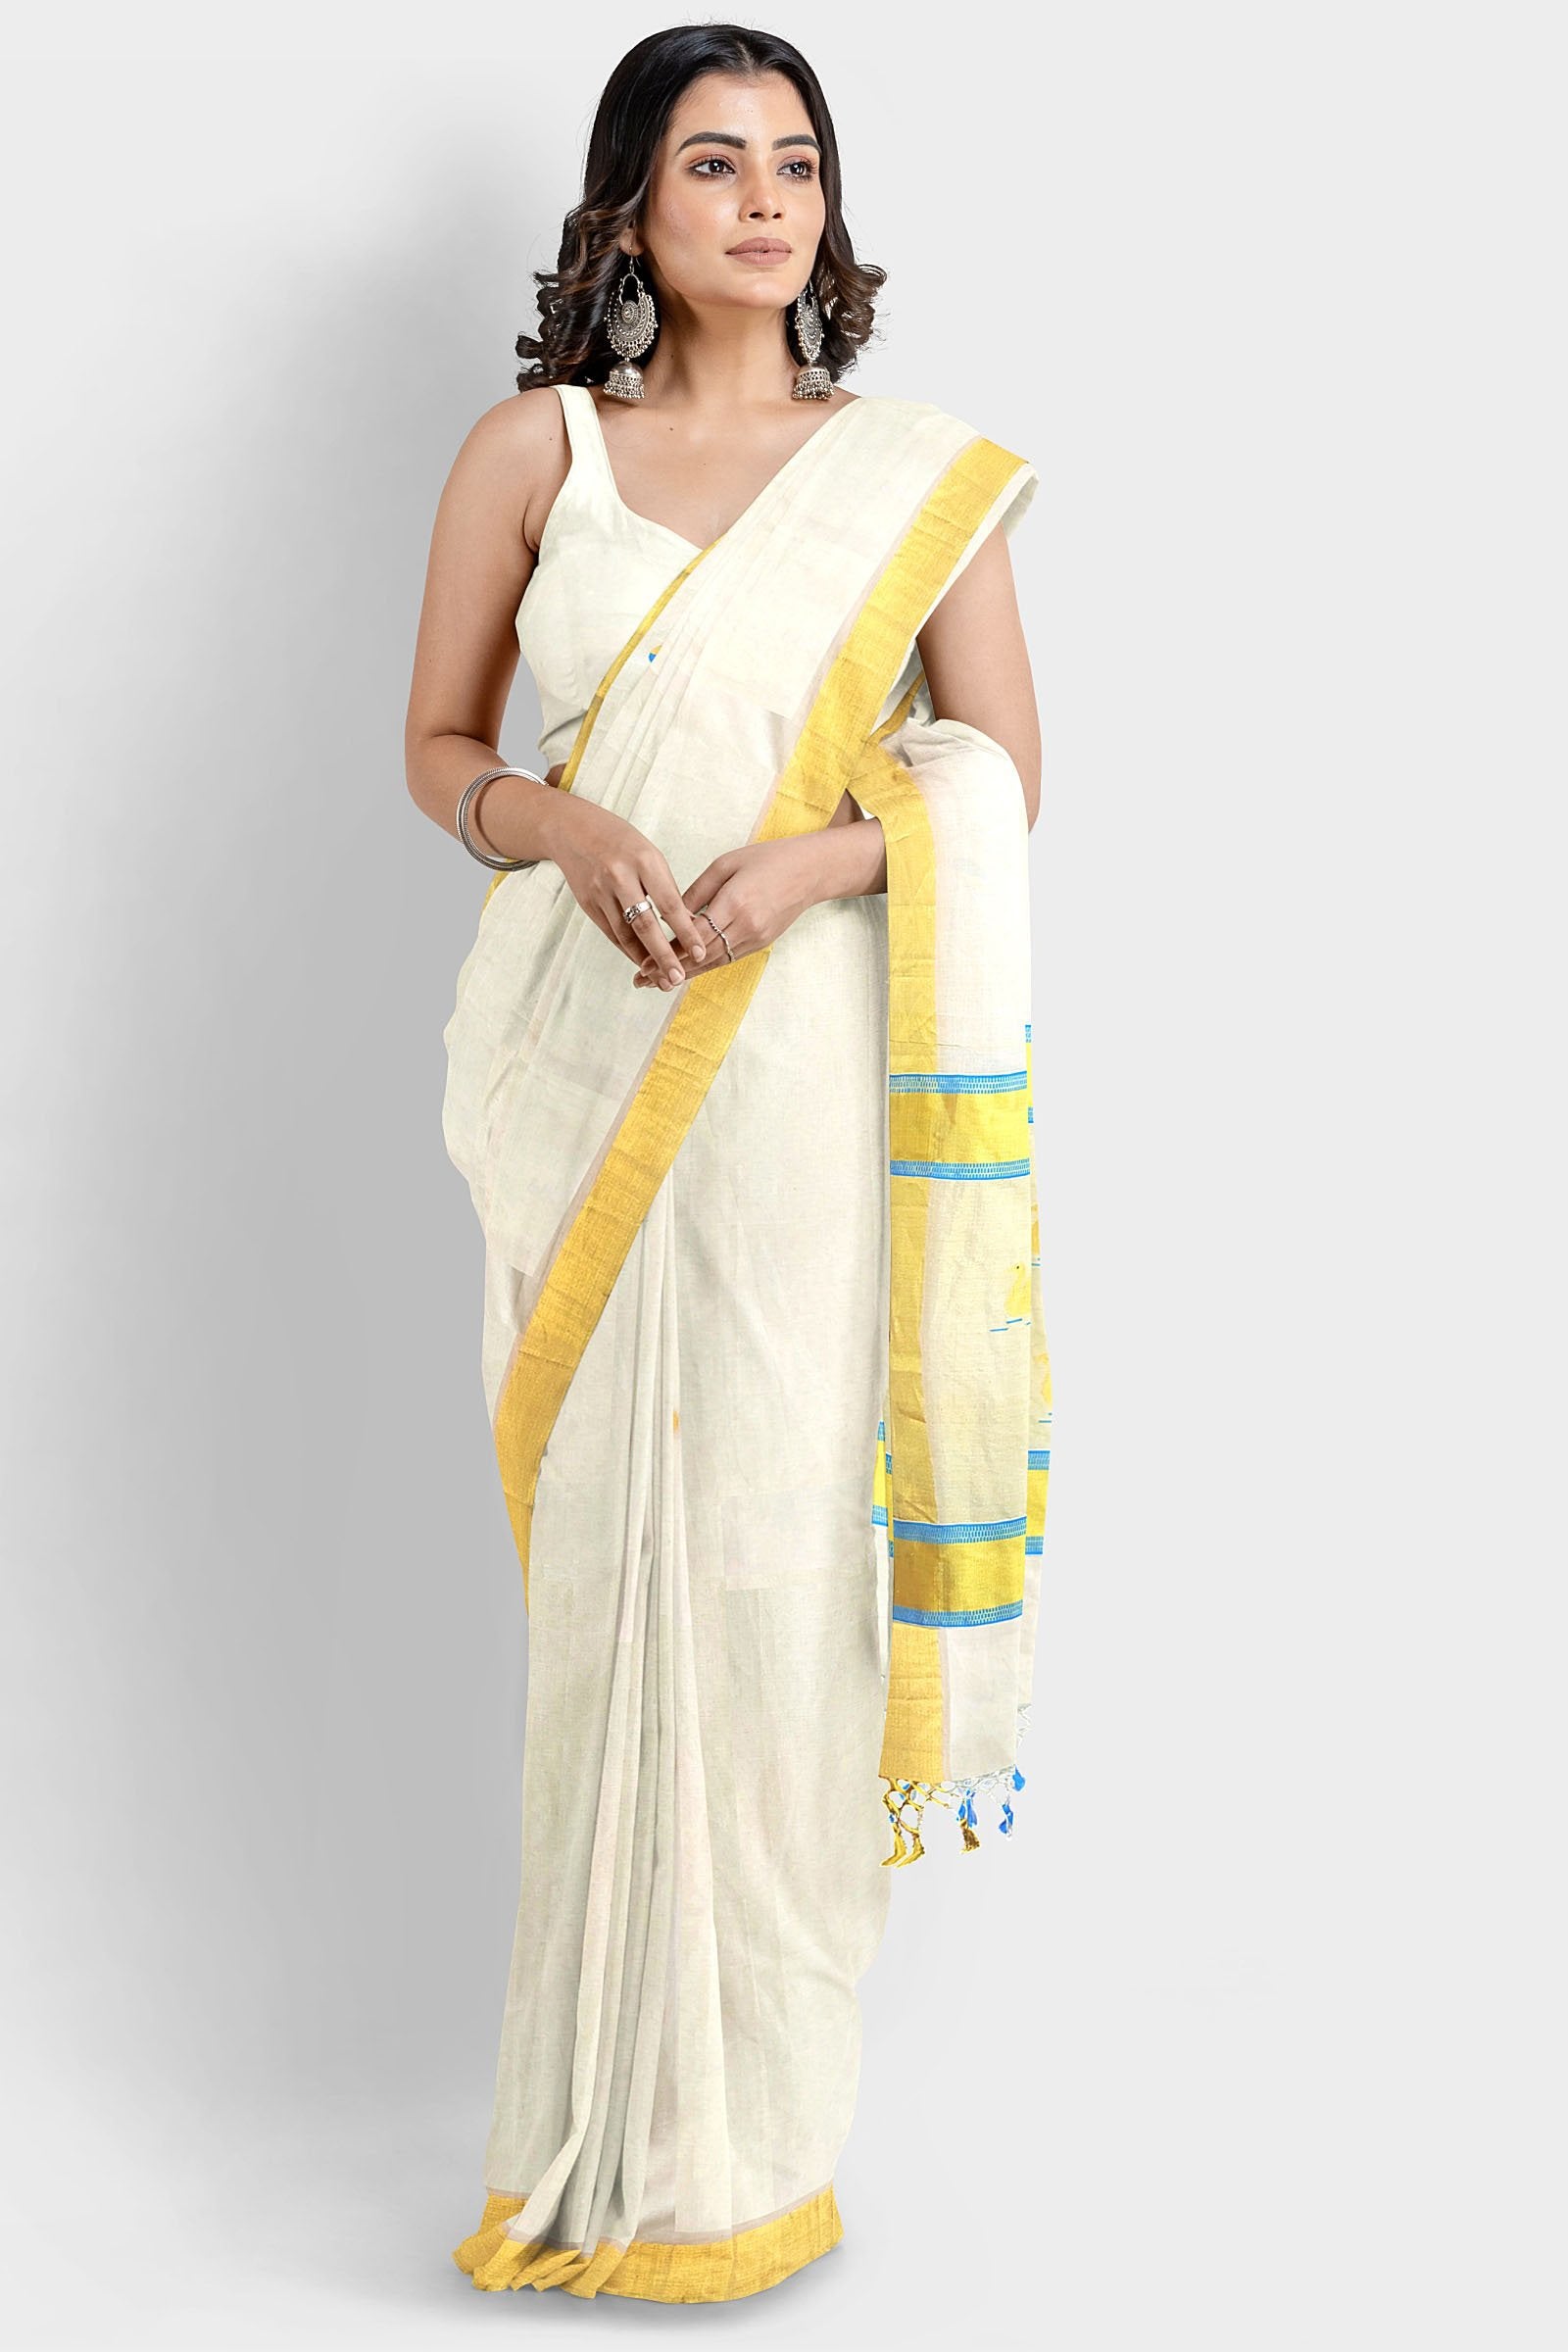 Why do Kerala women wear only white saree? - Quora